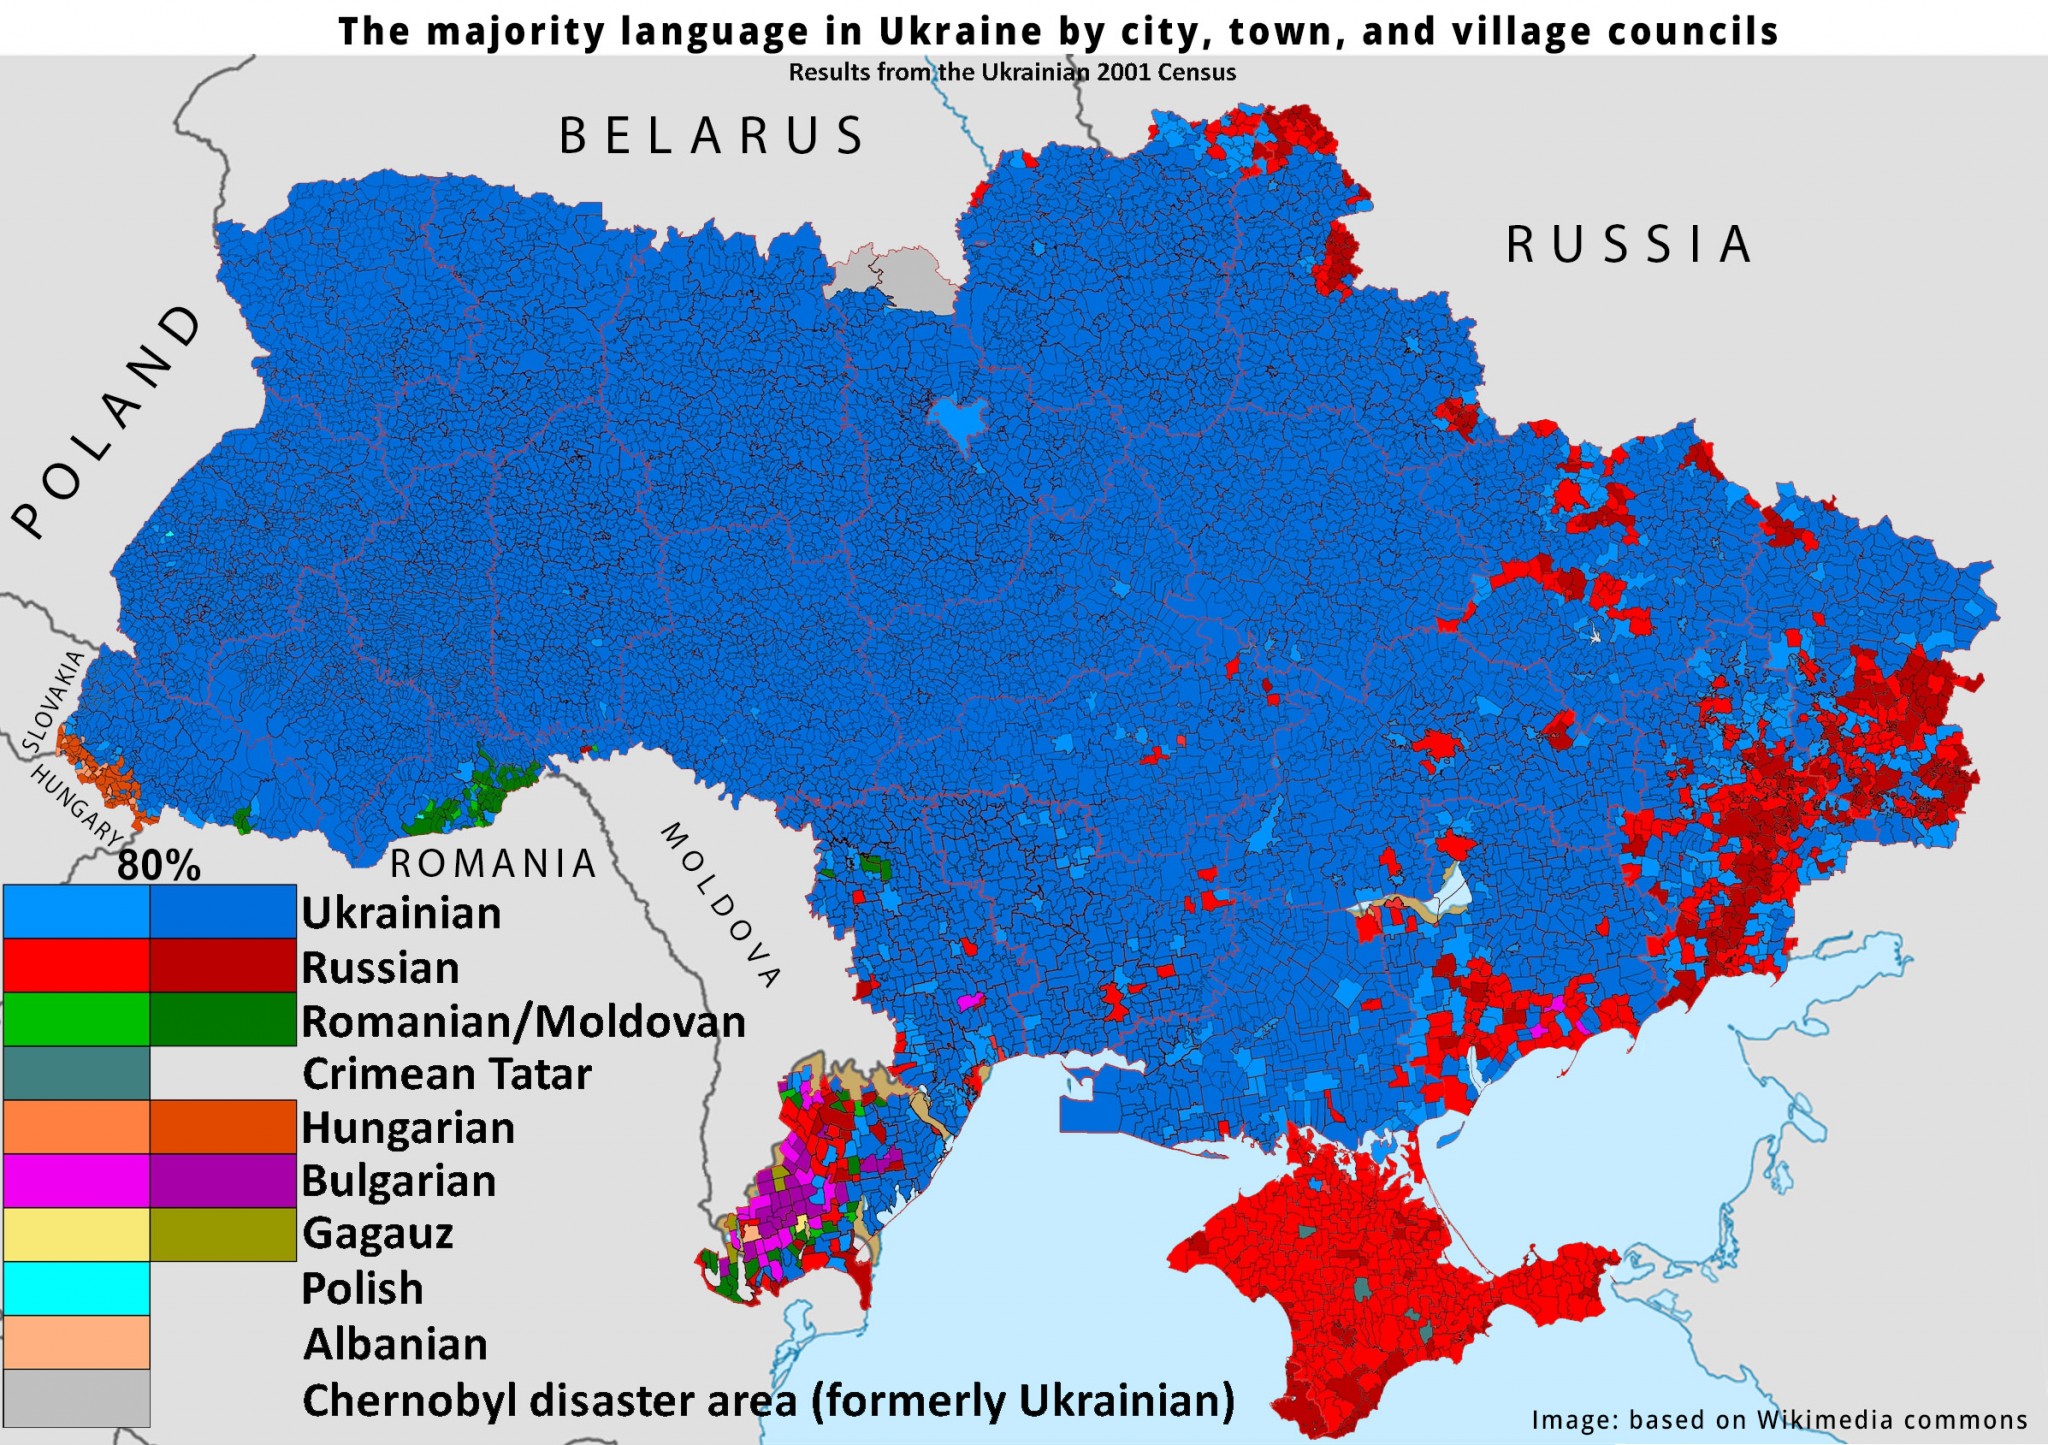 Image: Wikimedia commons, edited by Euromaidan Press ~